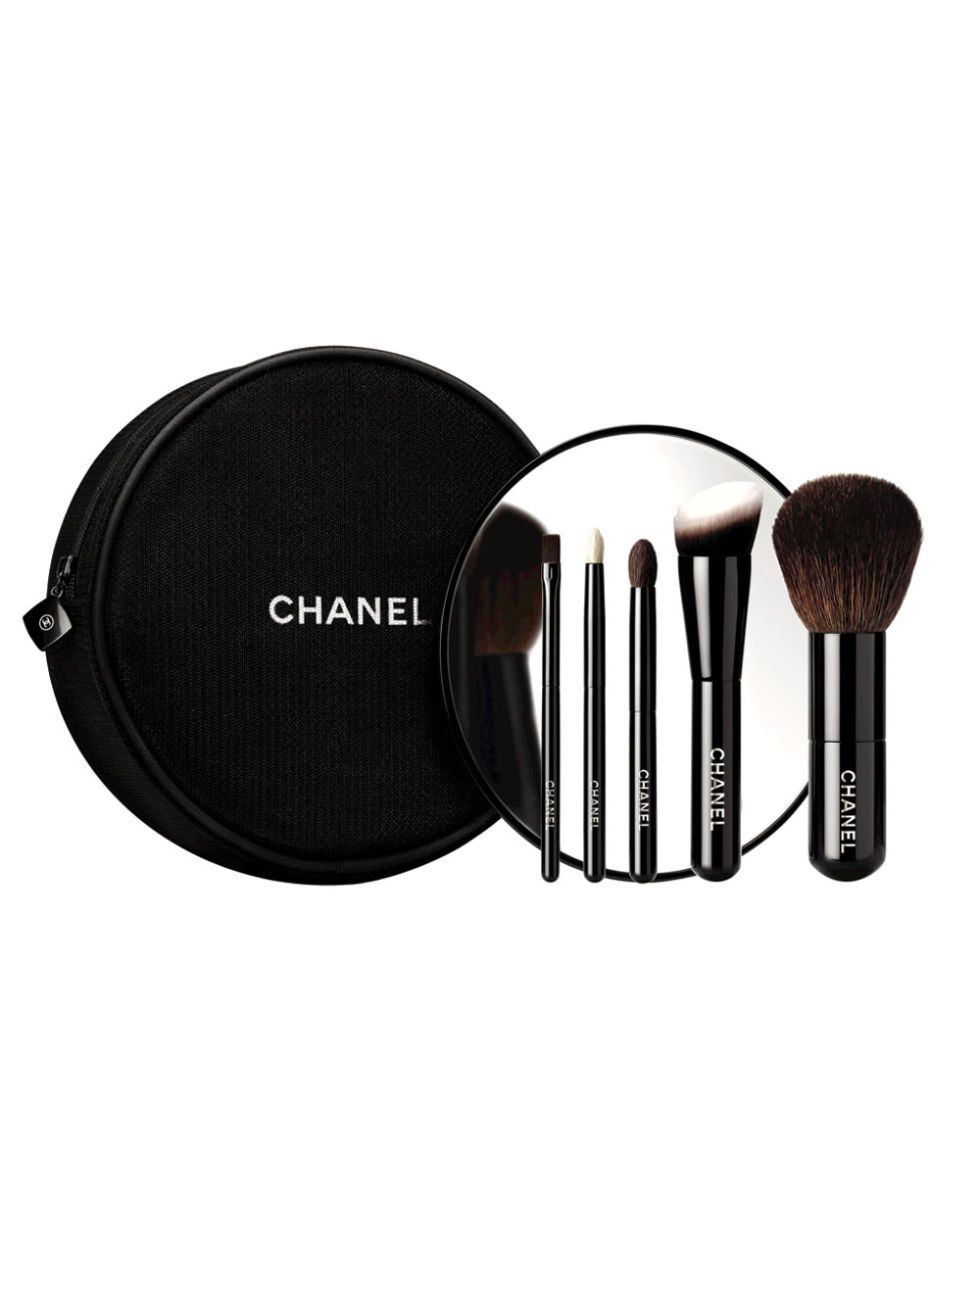 <p>Chanel Les Minis de Chanel (limited edition), € 92 - verkrijgbaar via <a href="http://www.chanel.com/en_HK/fragrance-beauty/makeup/p/brushes-and-accessories/lip-brushes/les-mini-de-chanel-collection-of-5-essential-mini-brushesbr_limited-edition-p137367.html#skuid-0137367" target="_blank">chanel.com</a></p><p>Voor meer inspiratie breng je een bezoek aan onze&nbsp;<a href="http://www2.elle.nl/shop/#!/view/tags/282/" target="_blank">ELLE Shop Gift Guide</a>&nbsp;&gt;<span class="redactor-invisible-space" data-verified="redactor" data-redactor-tag="span" data-redactor-class="redactor-invisible-space"></span><br></p>